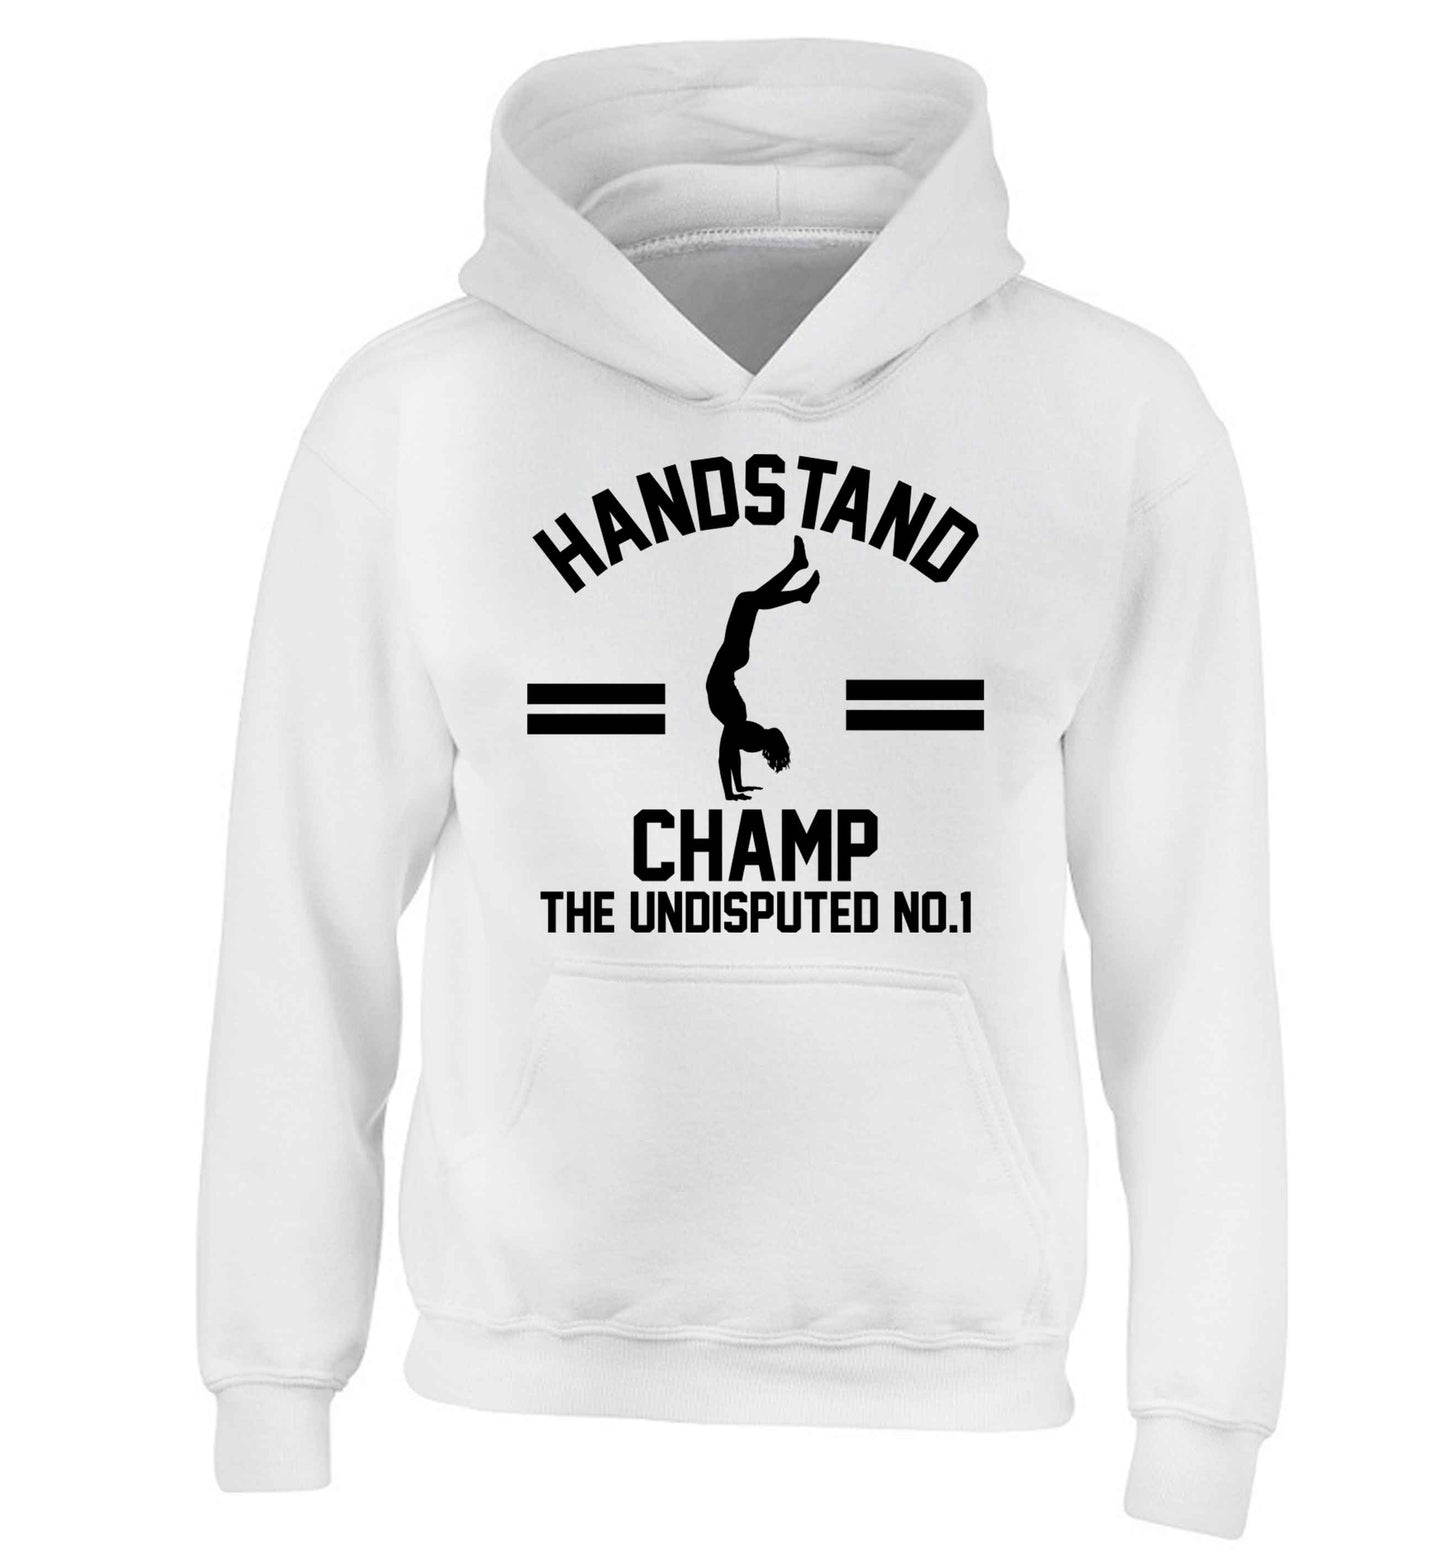 Undisputed handstand championship no.1  children's white hoodie 12-13 Years